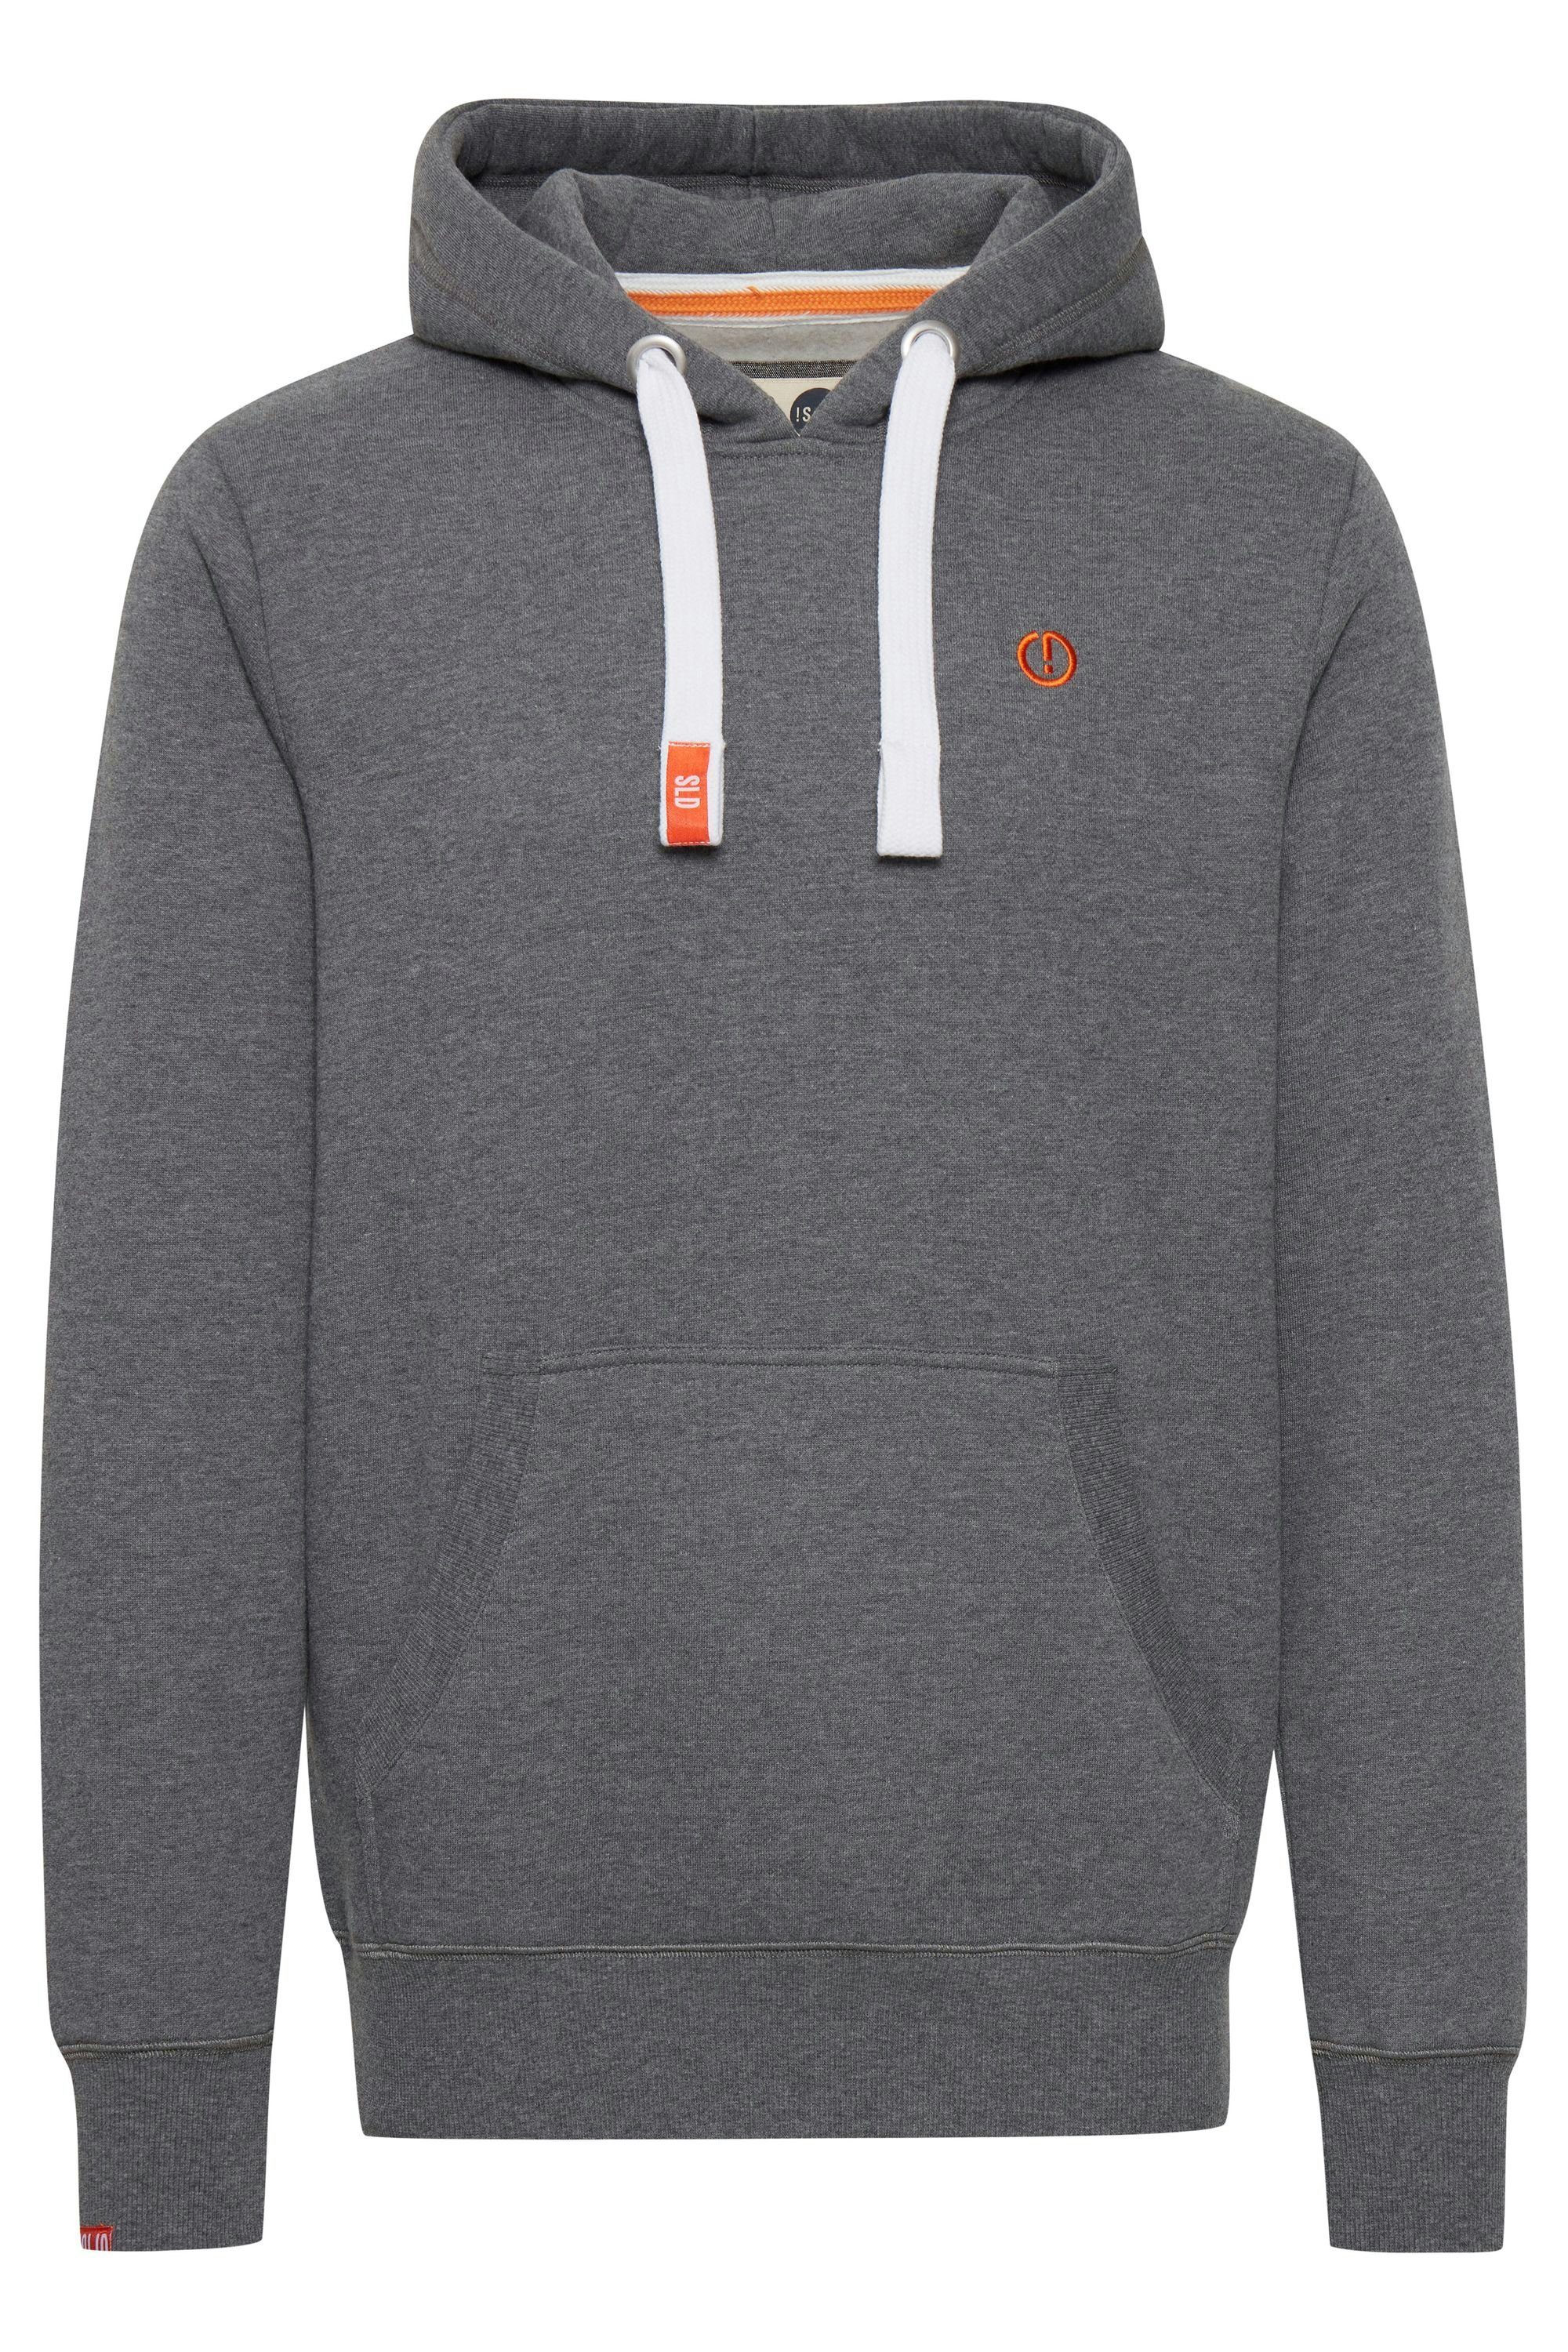 (8236) !Solid kontrastfarbenenen Grey Details Hoodie mit Kapuzensweatshirt Melange SDBennHood